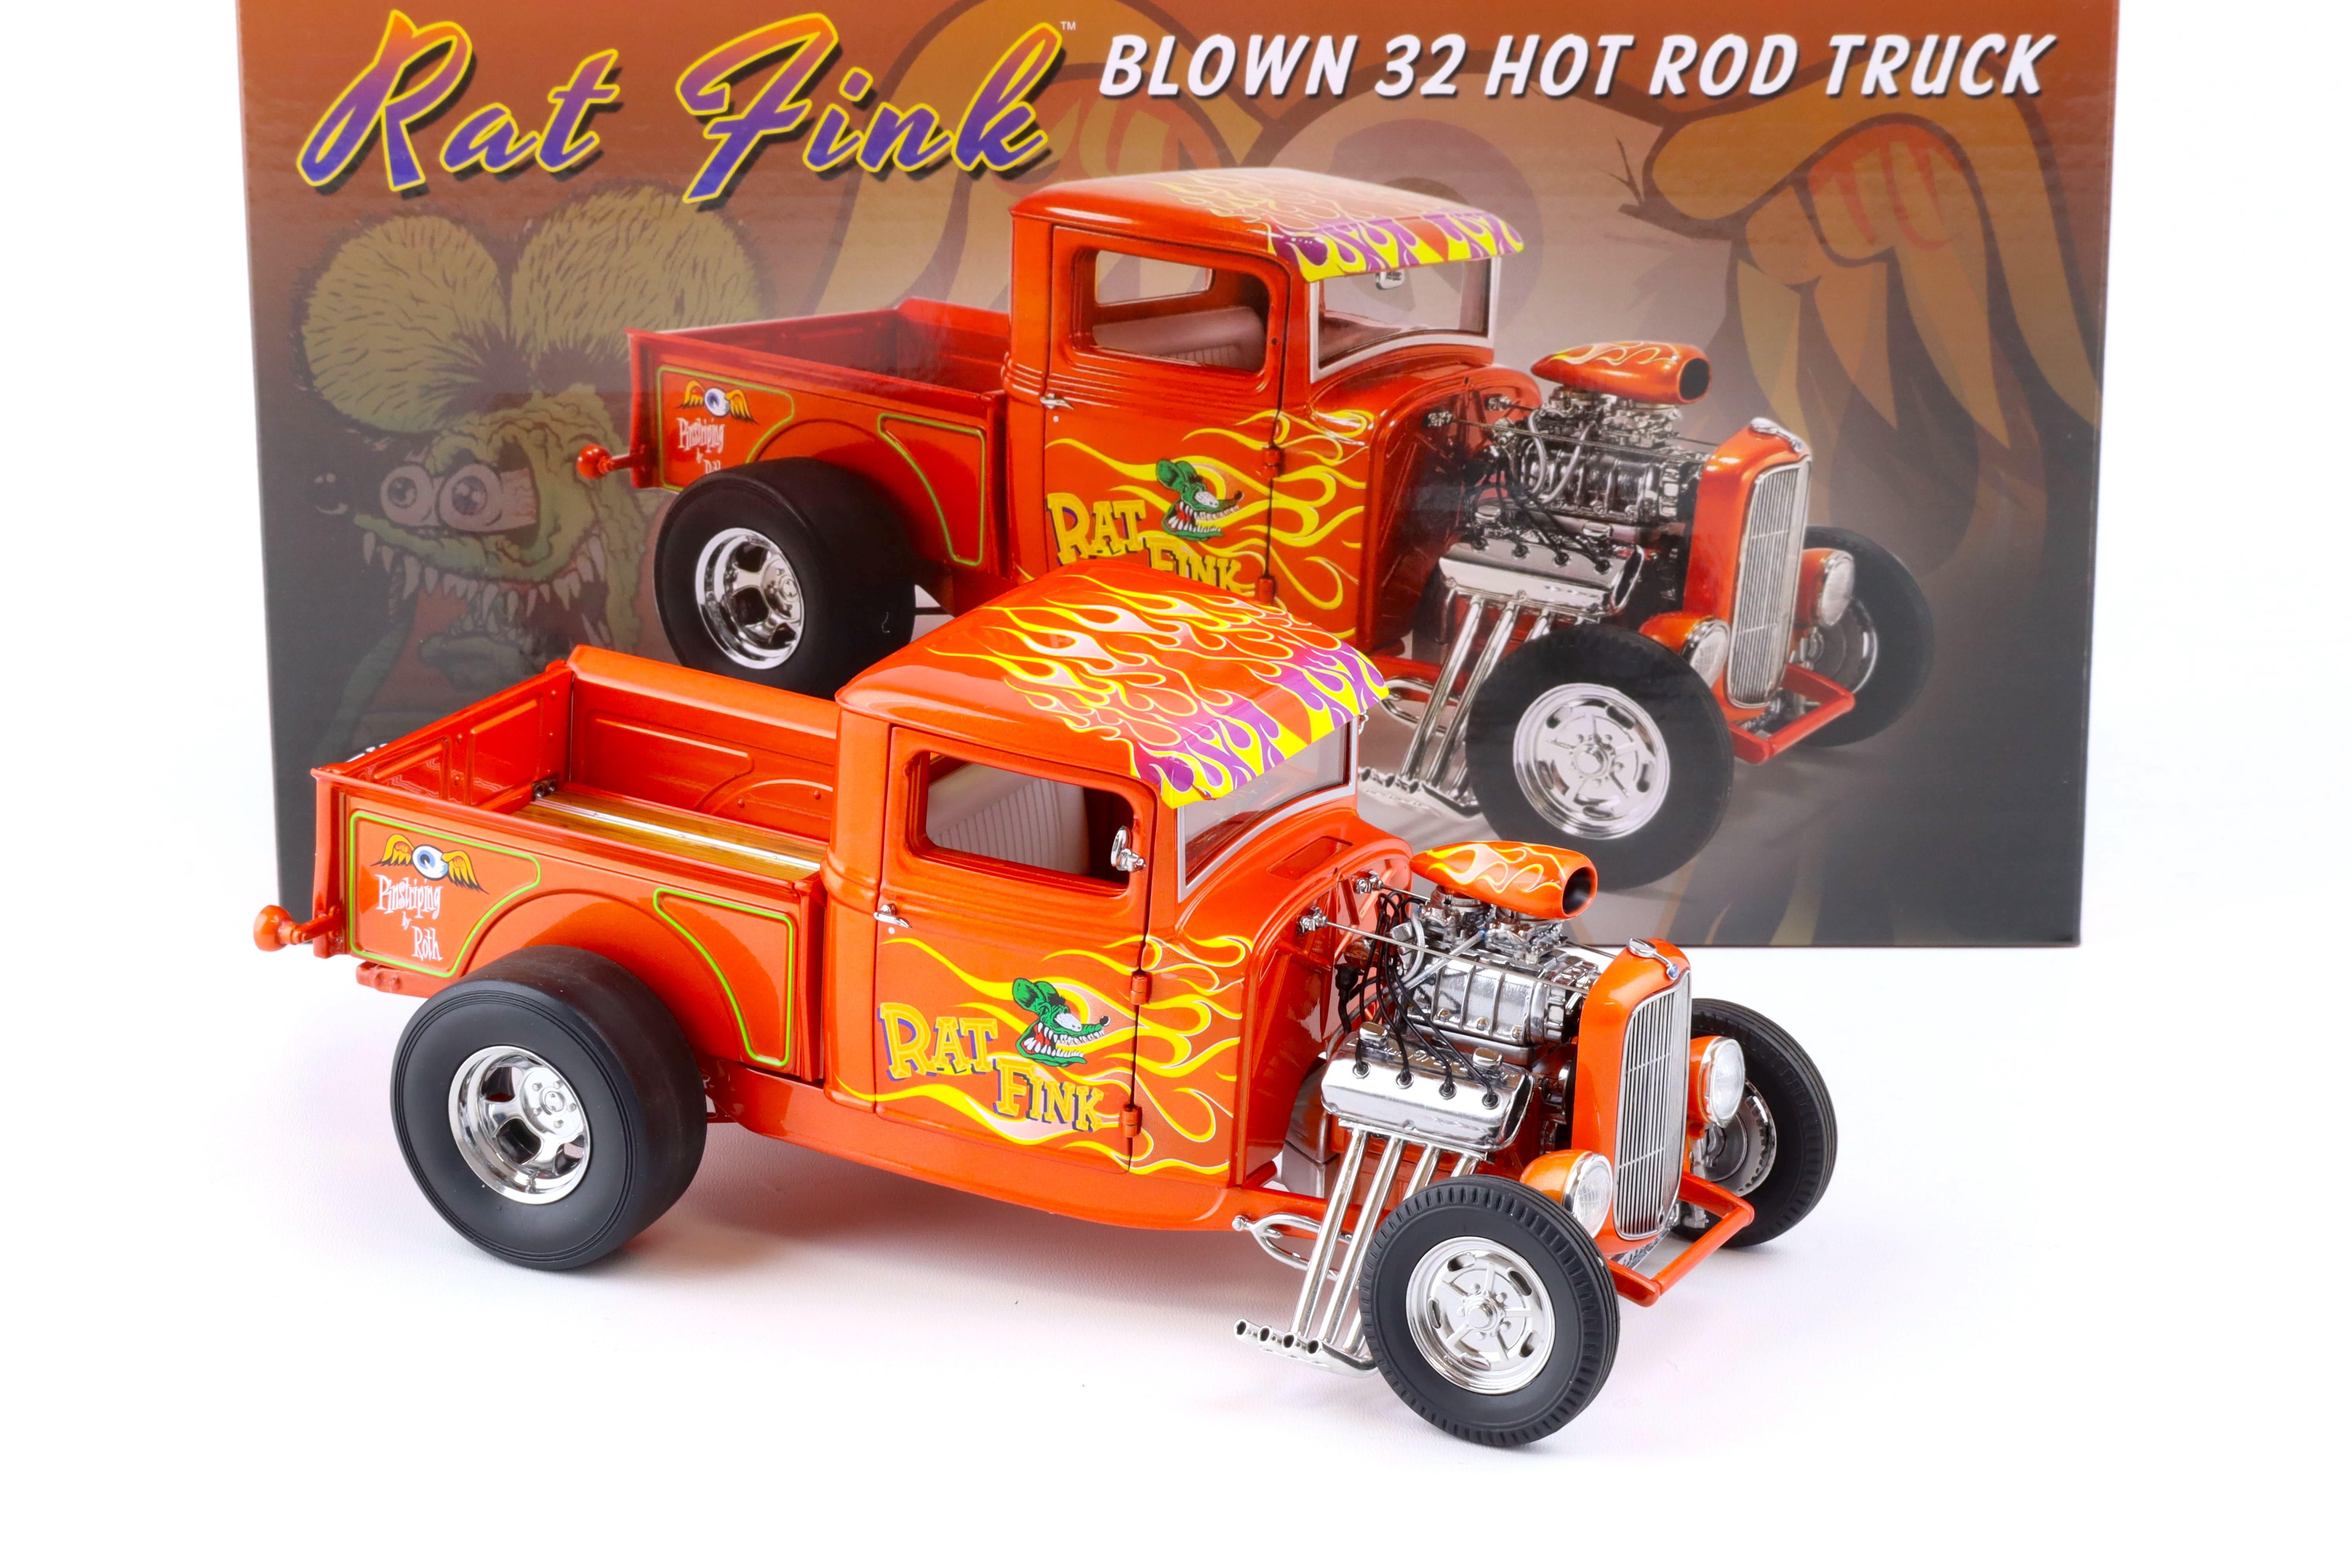 1:18 ACME 1932 Ford Blown 32 Hot Rod Truck RAT FINK orange A1804102